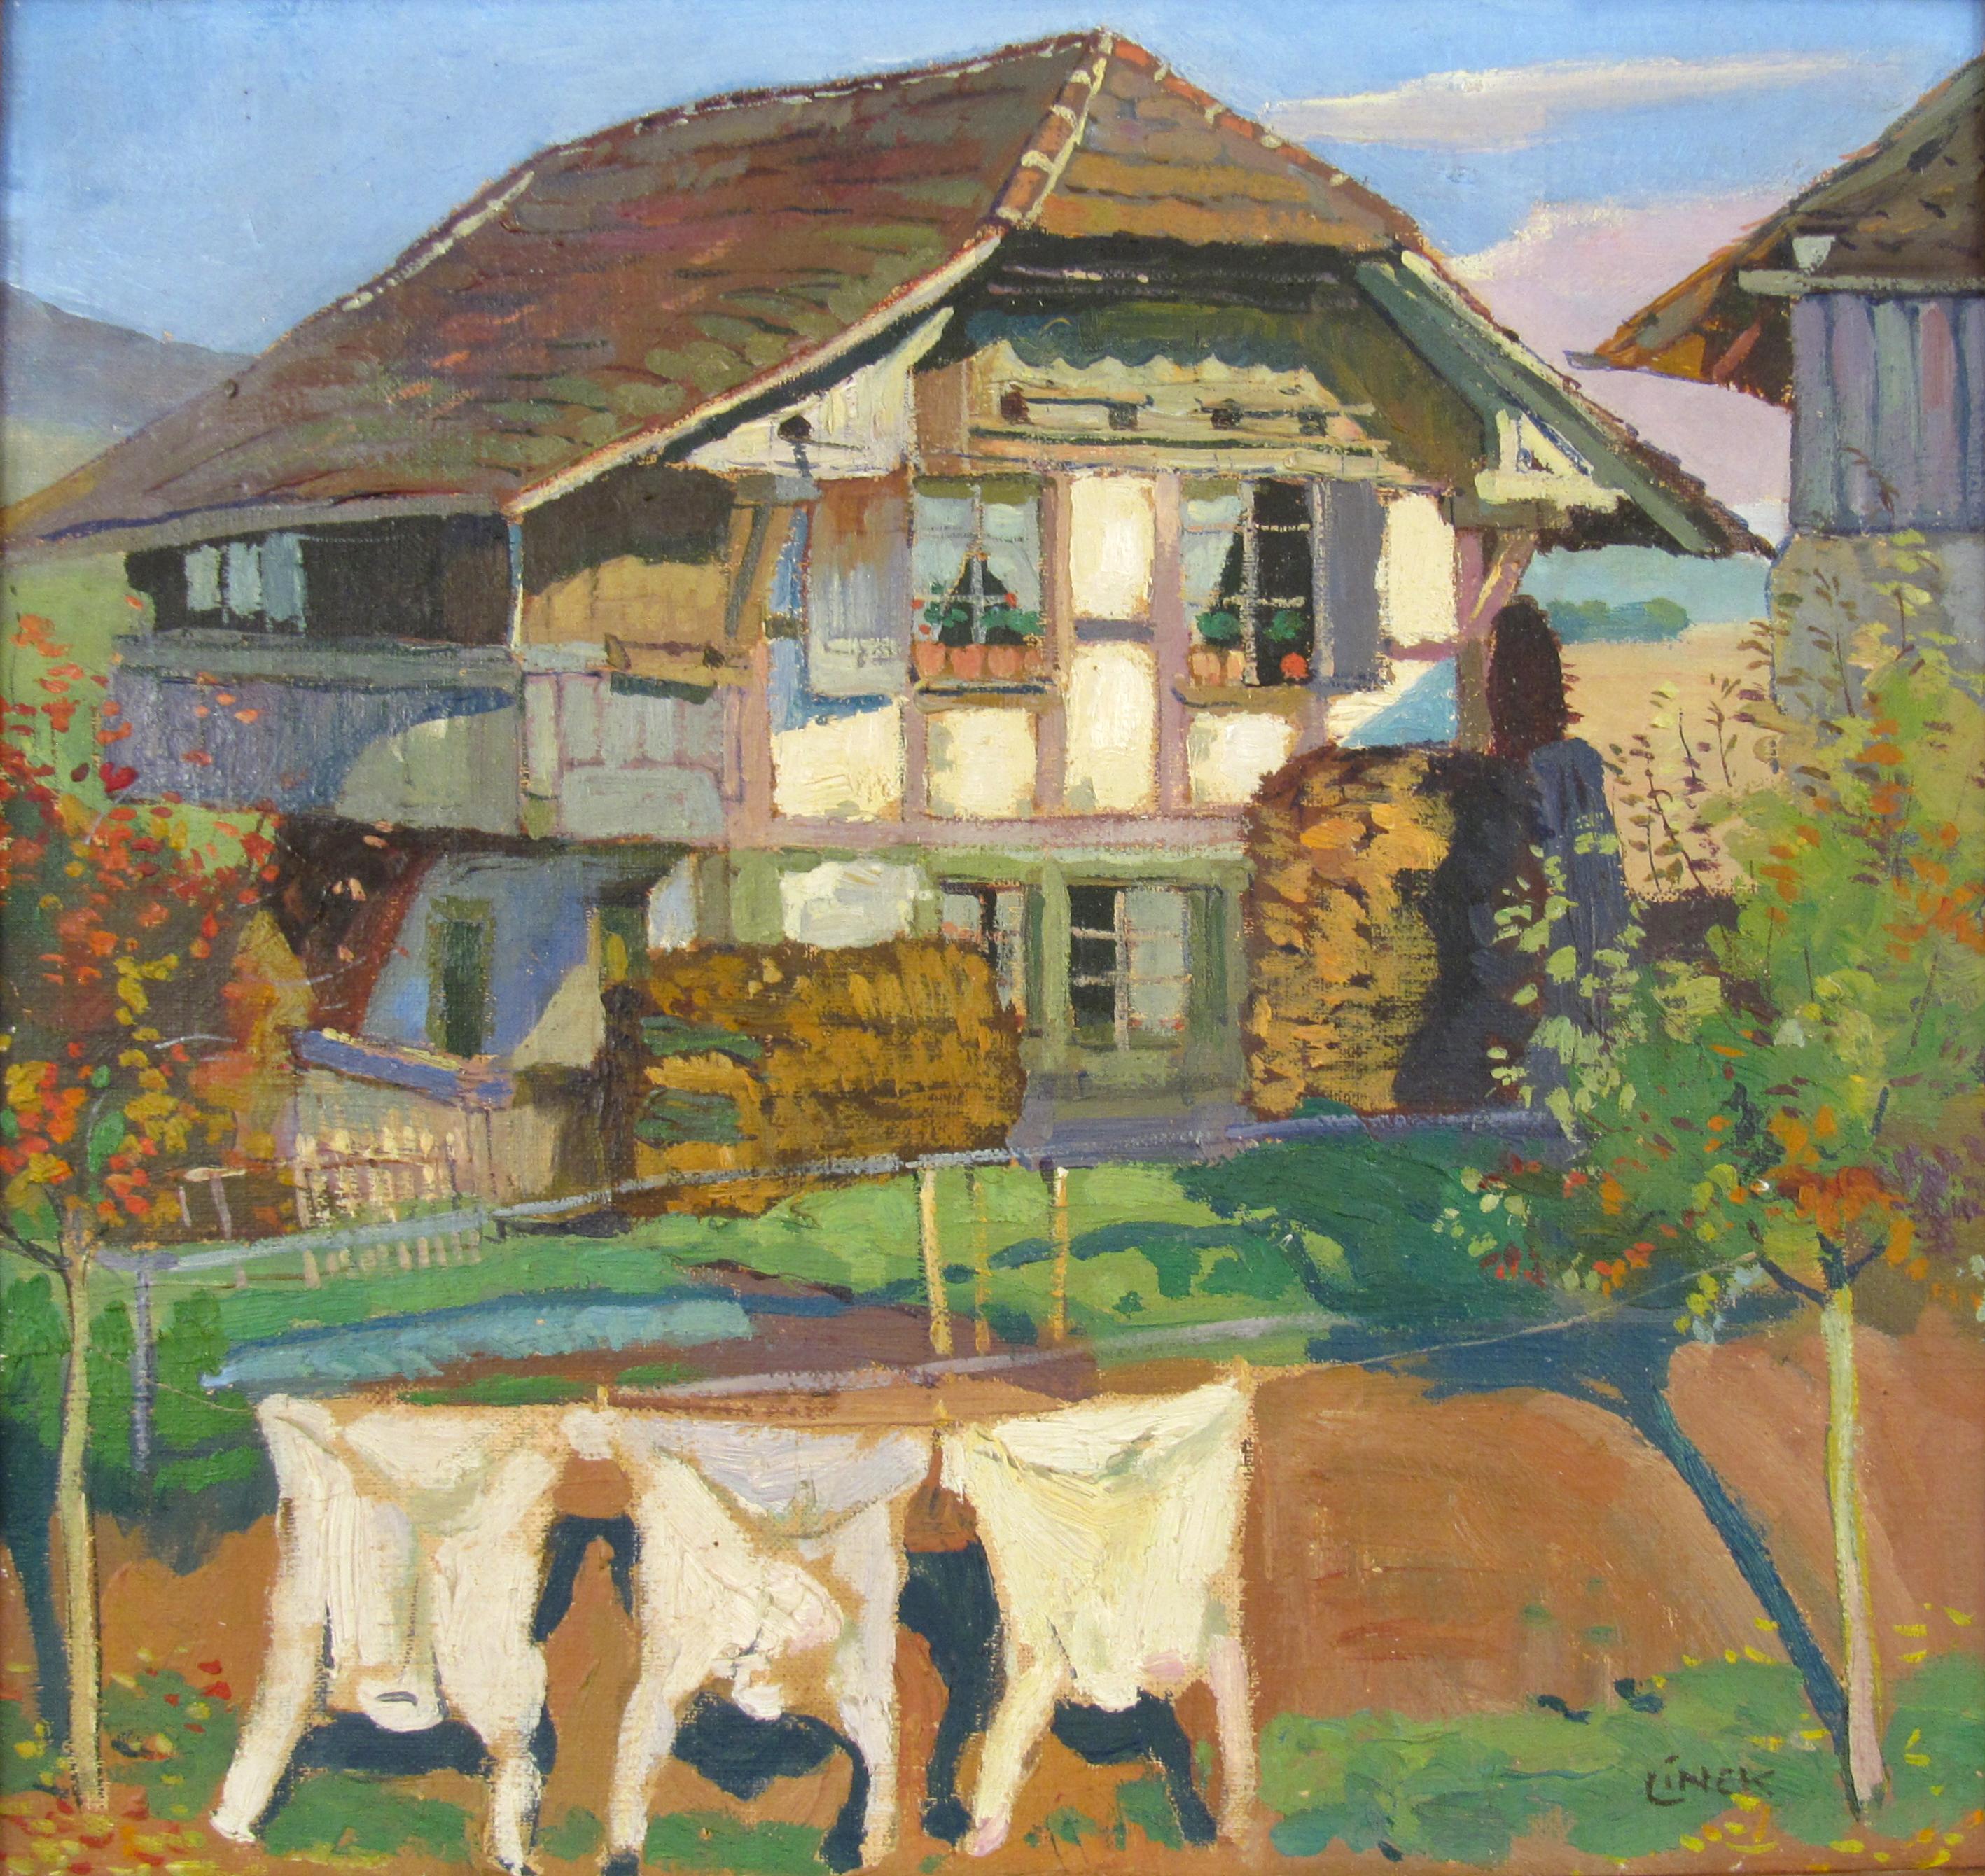 Ernst LINCK (1874 - 1935) Farmhouse with Clothesline School of Berne Switzerland - Brown Landscape Painting by Ernst Linck